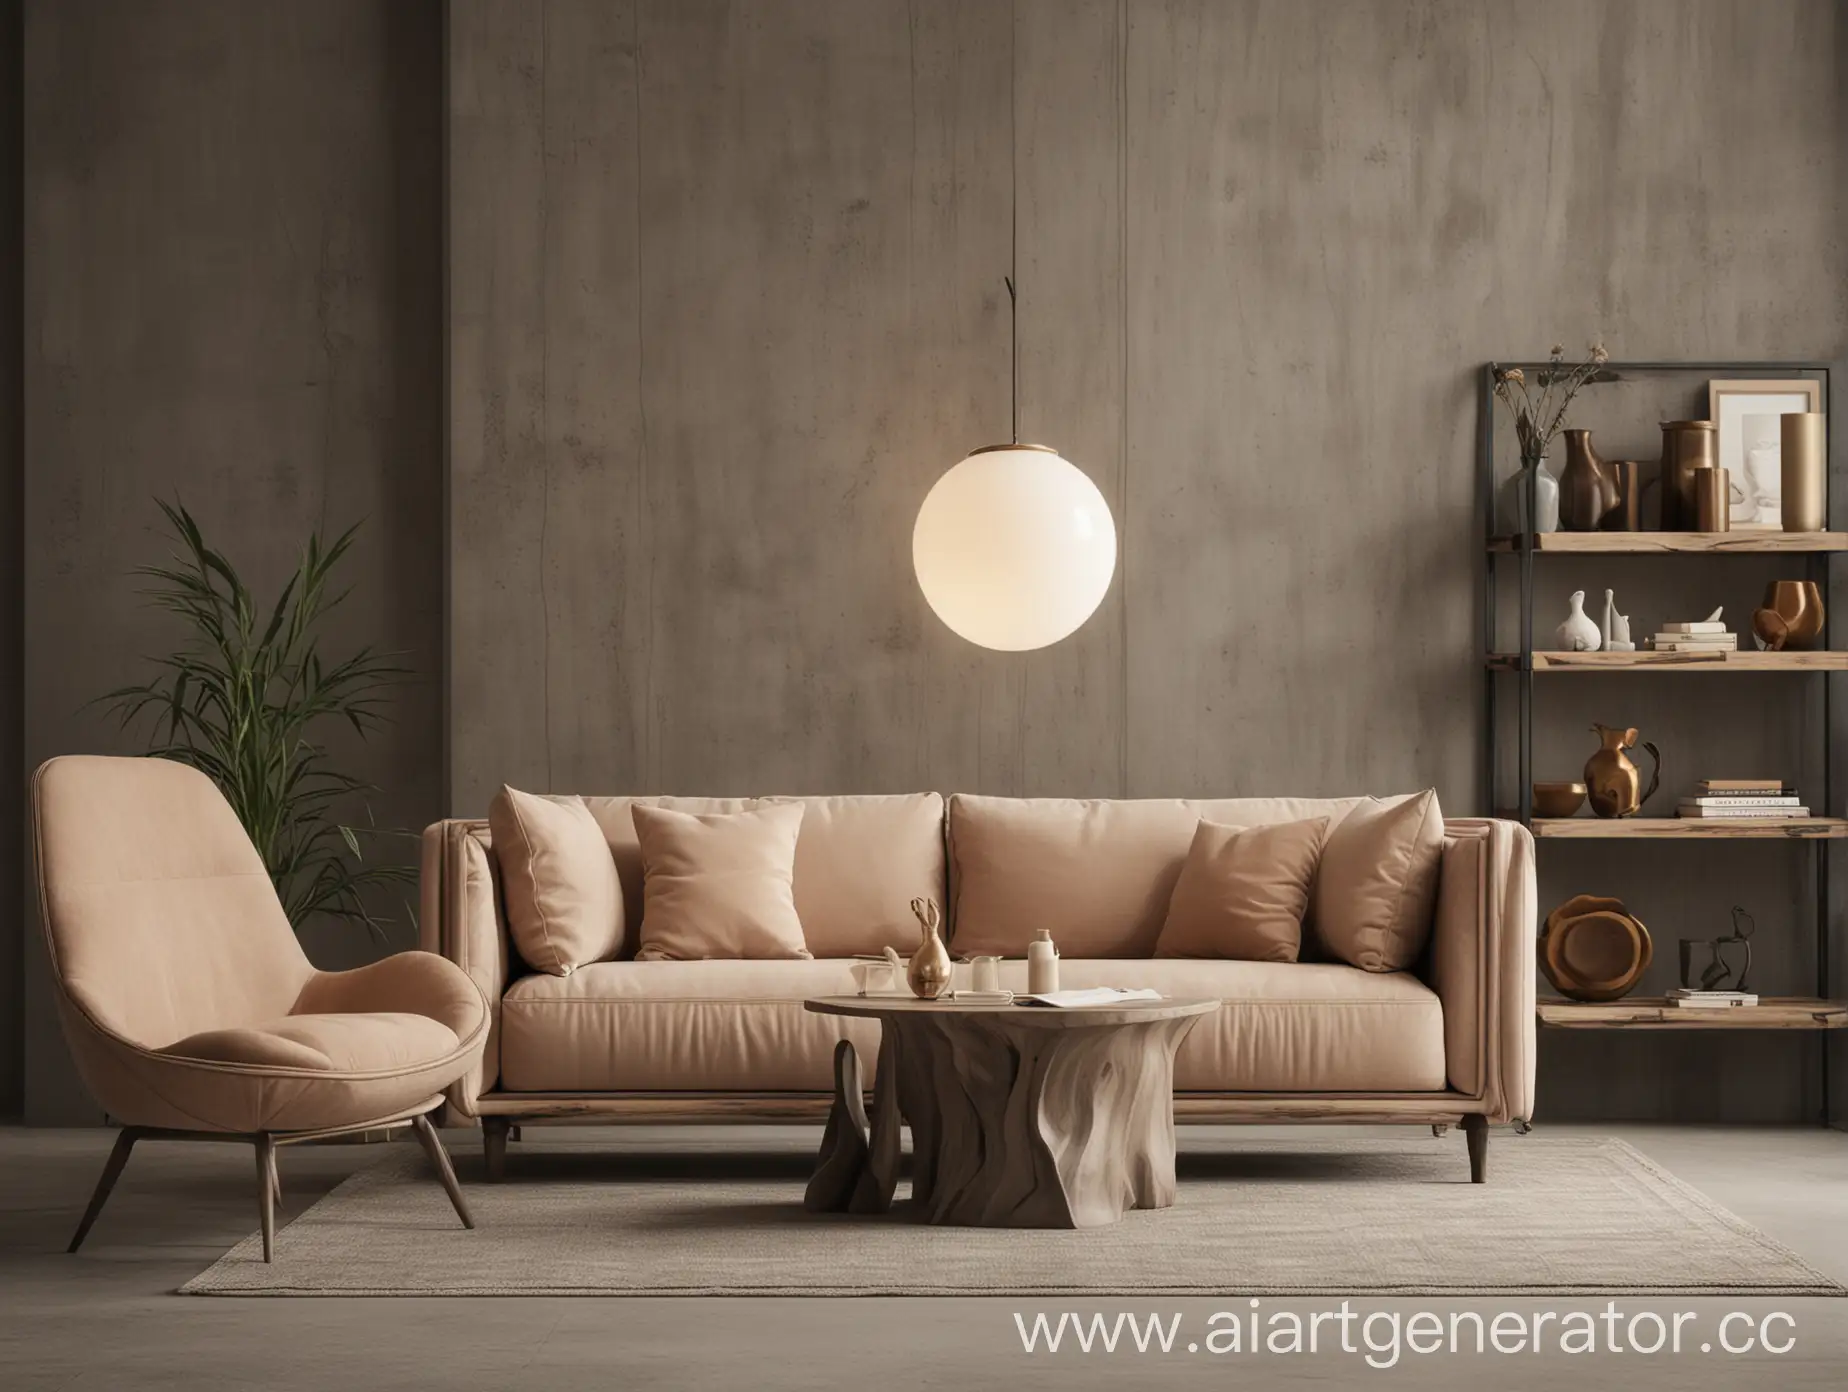 Modern-Interior-Design-with-Stylish-Furniture-and-Decor